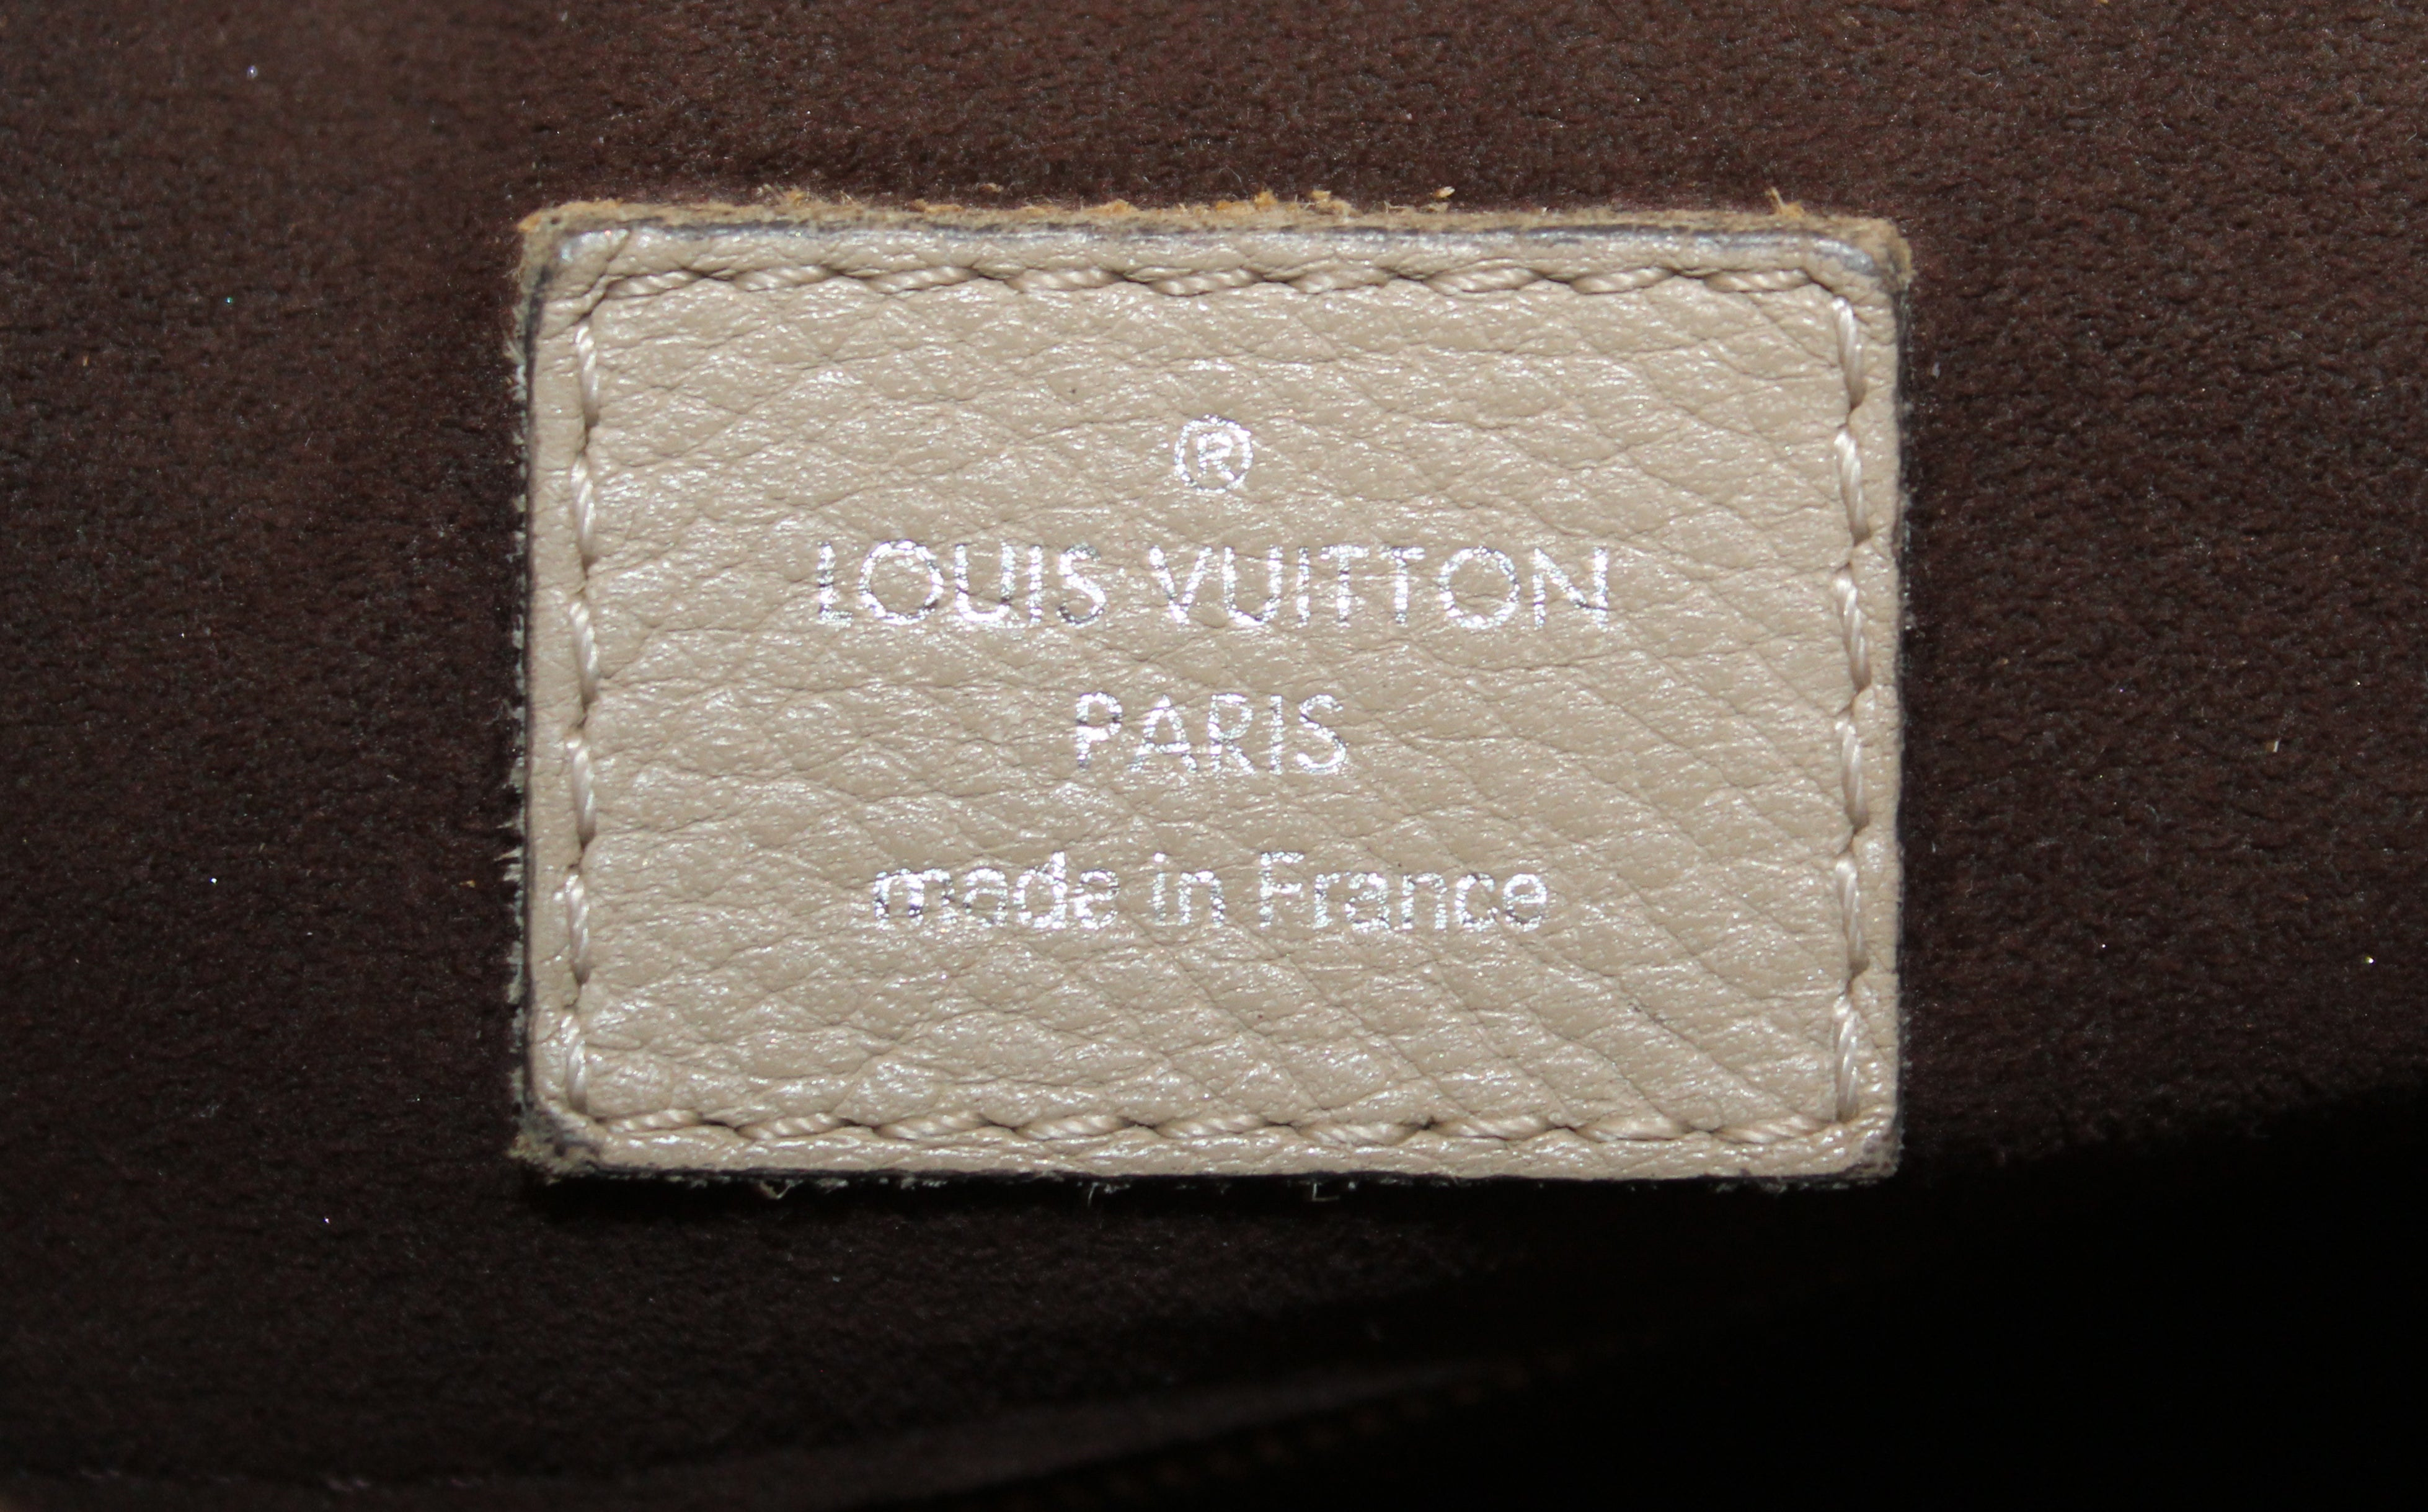 Louis Vuitton Babylon Chain BB Monogram Mahina Calf Leather Gallet